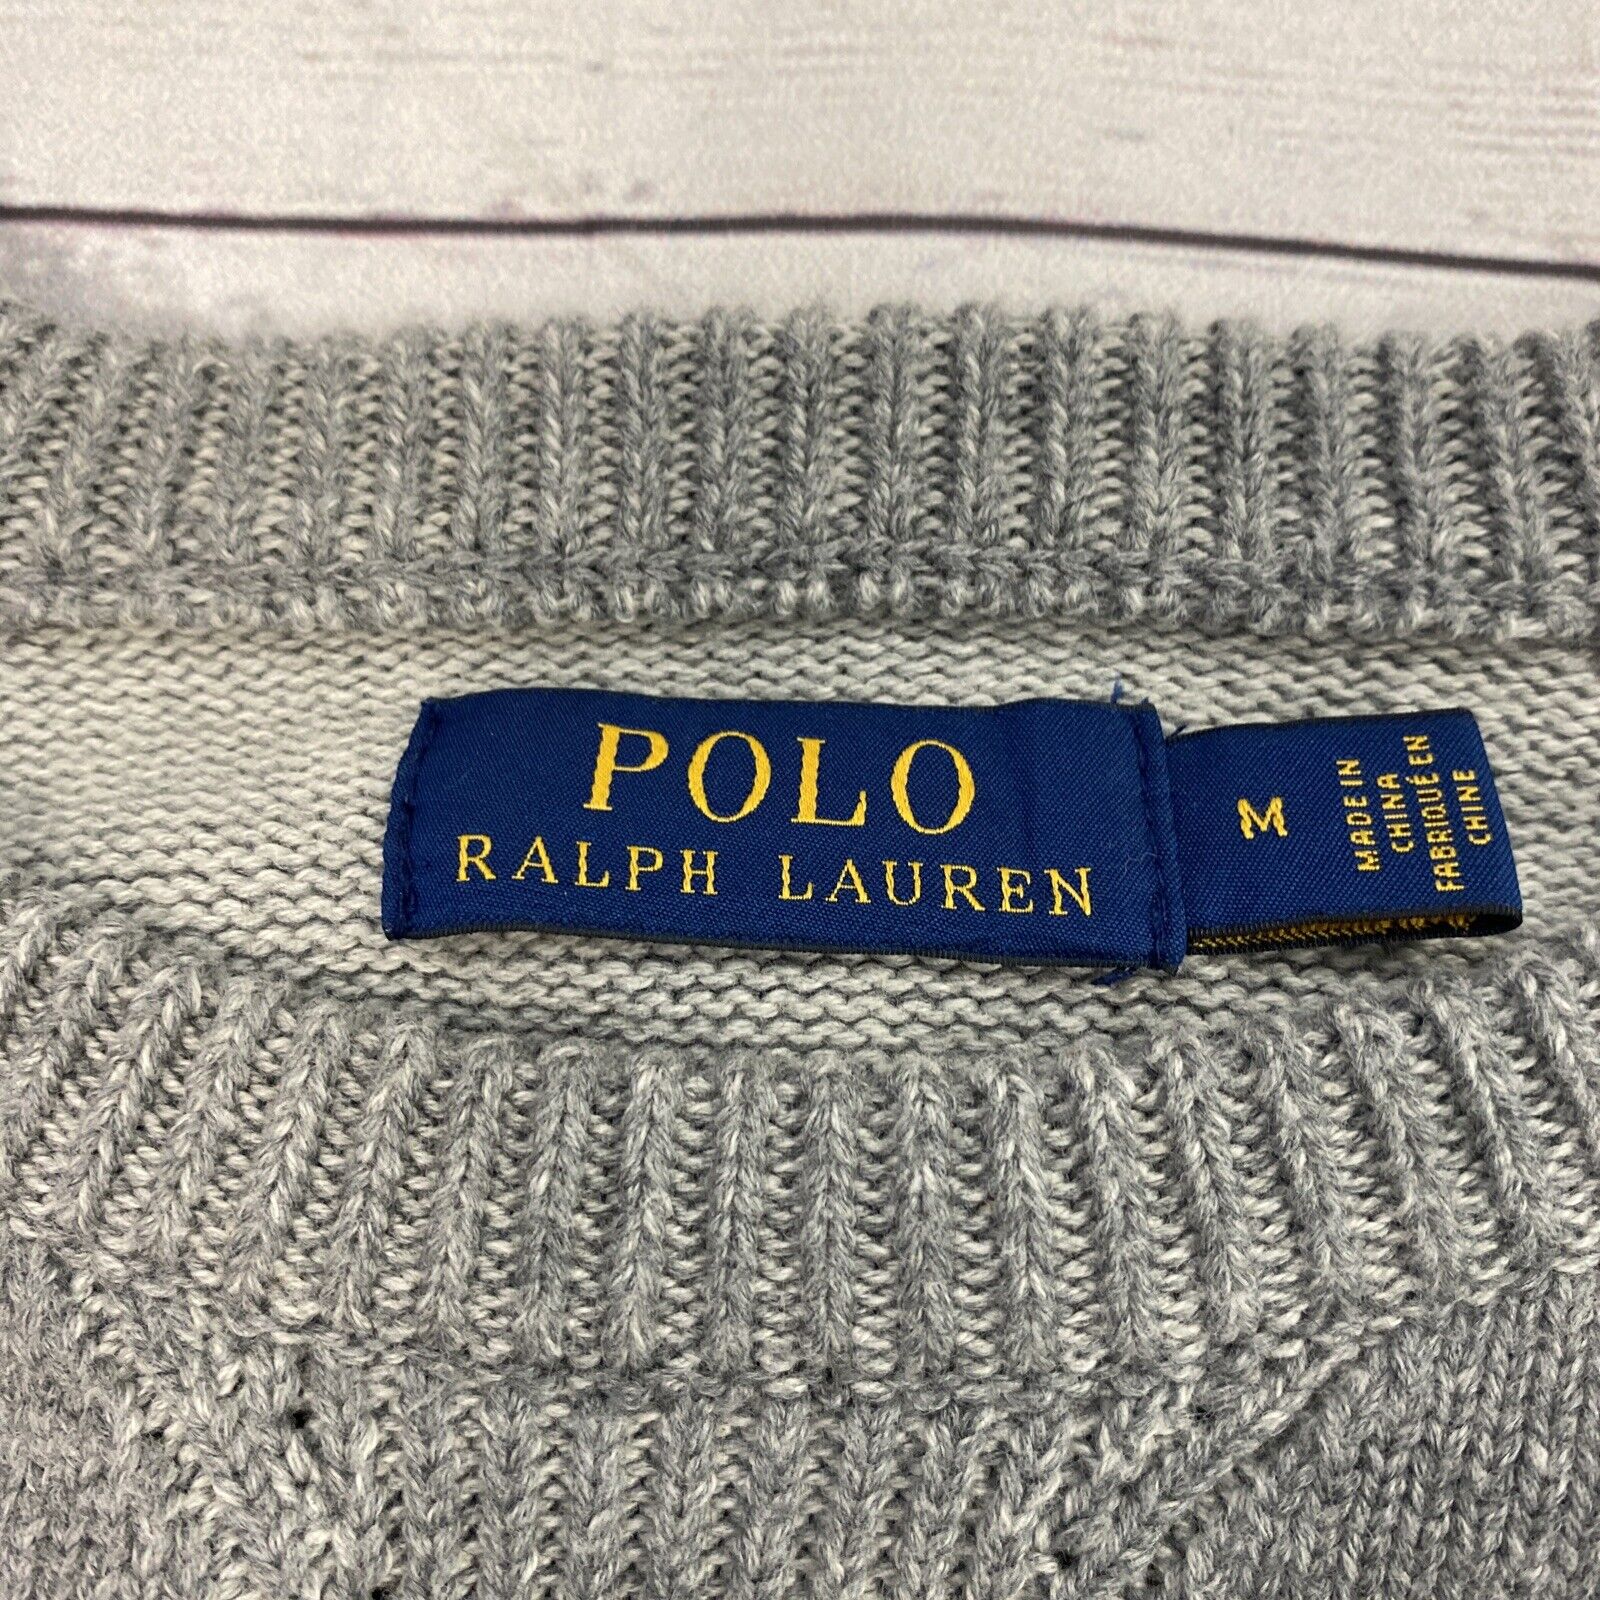 Polo Ralph Lauren Gray Cable Knit Crewneck Sweater Mens Size Medium -  beyond exchange